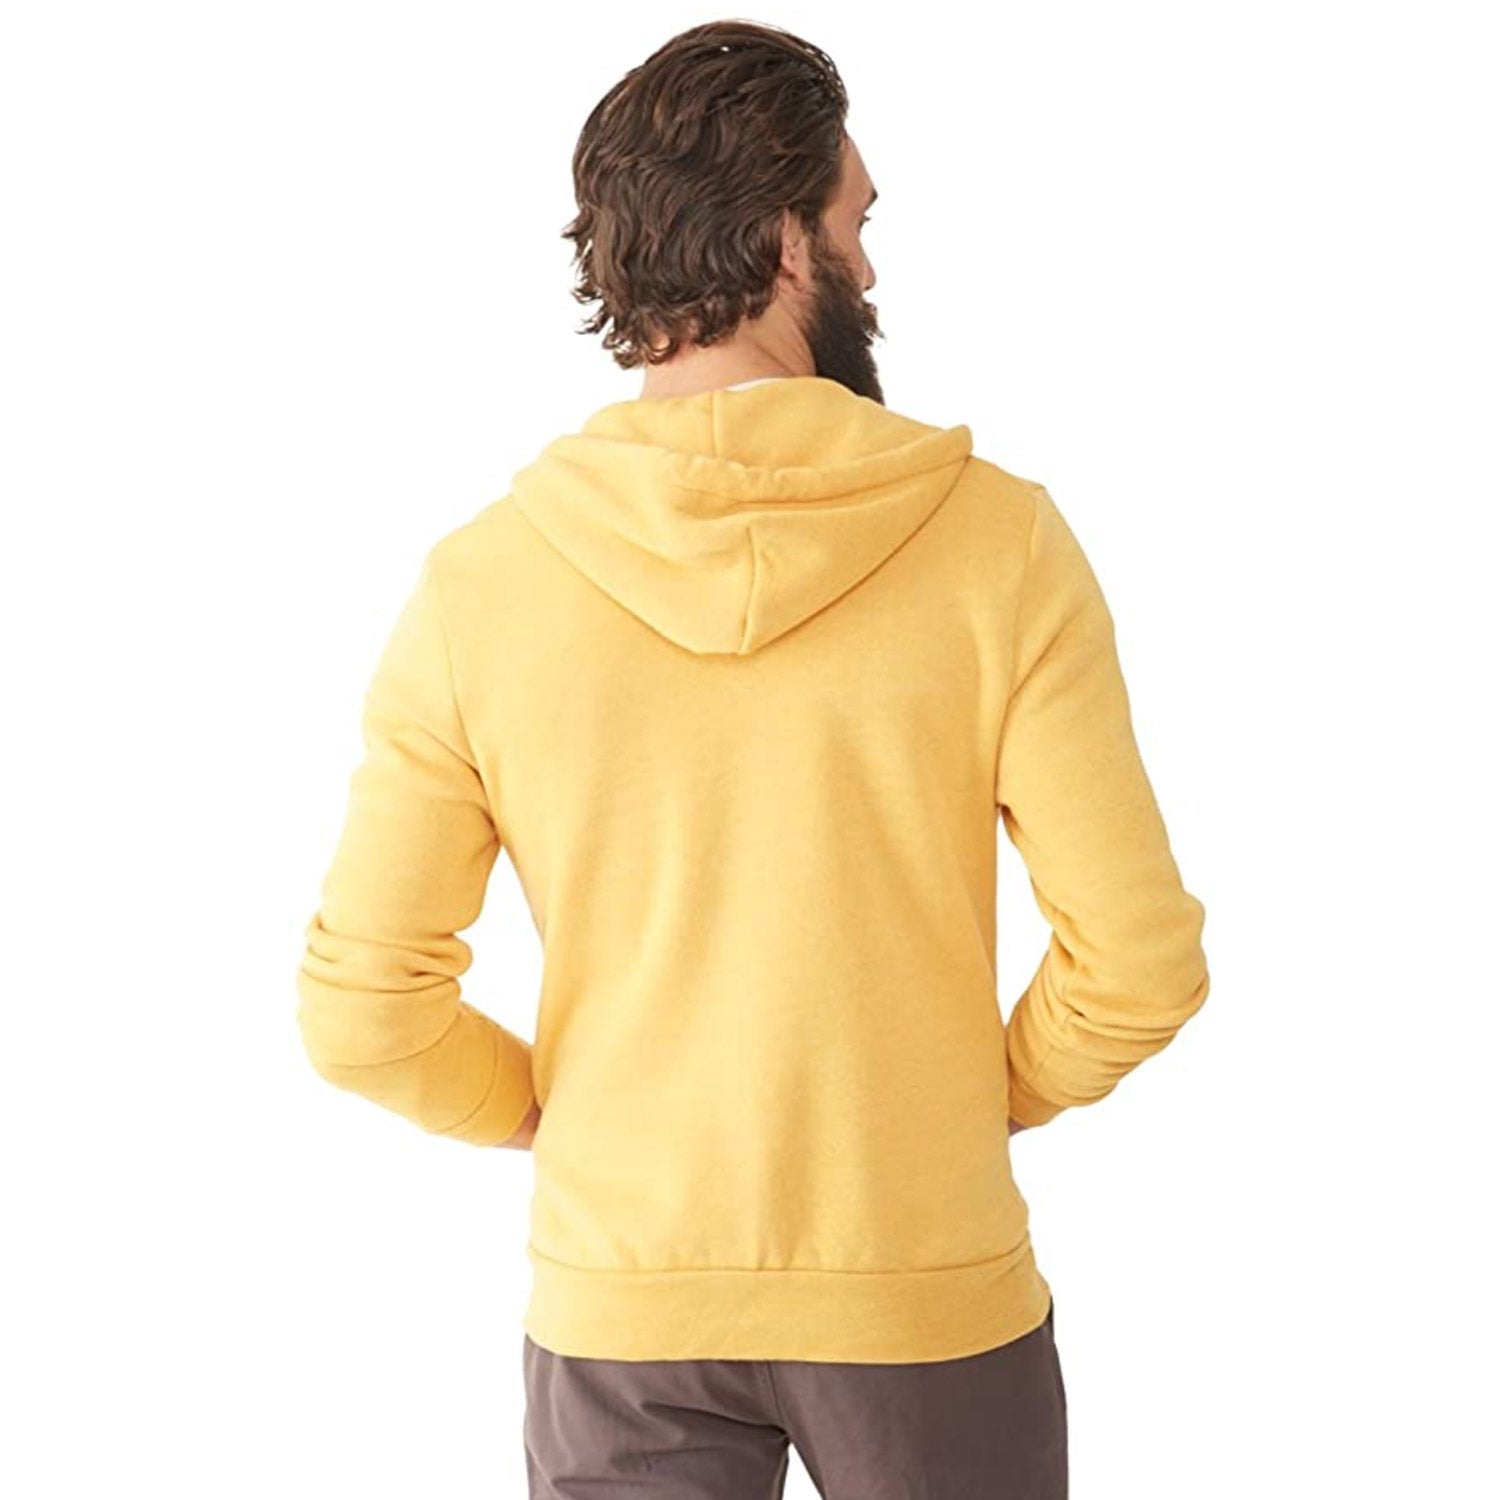 A man wearing a yellow sweatshirt.